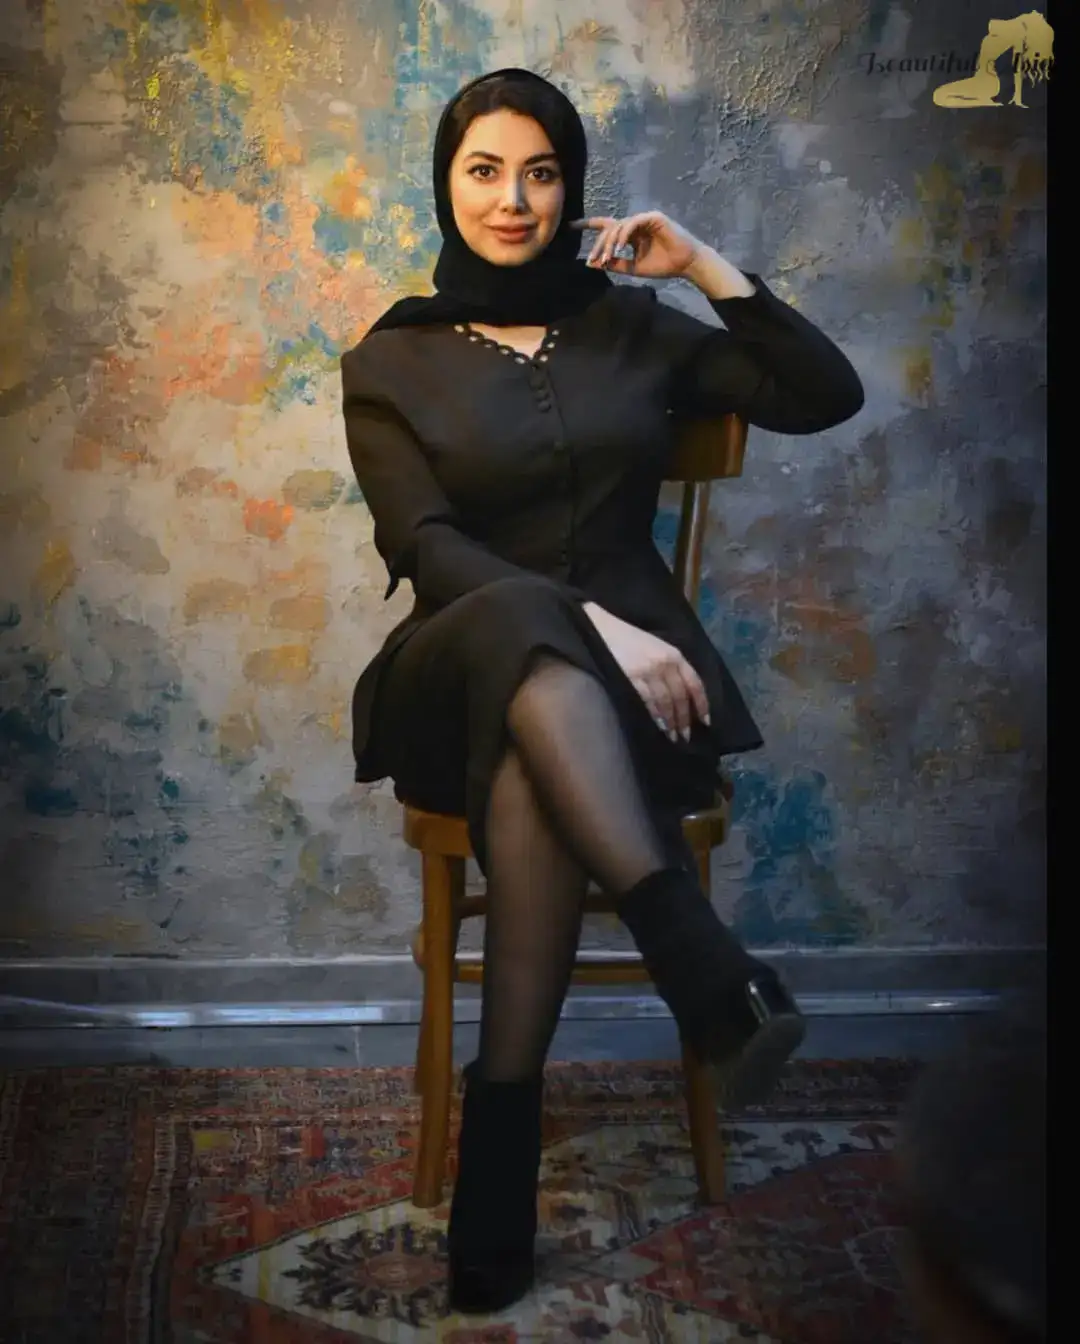 splendid Iranian women image